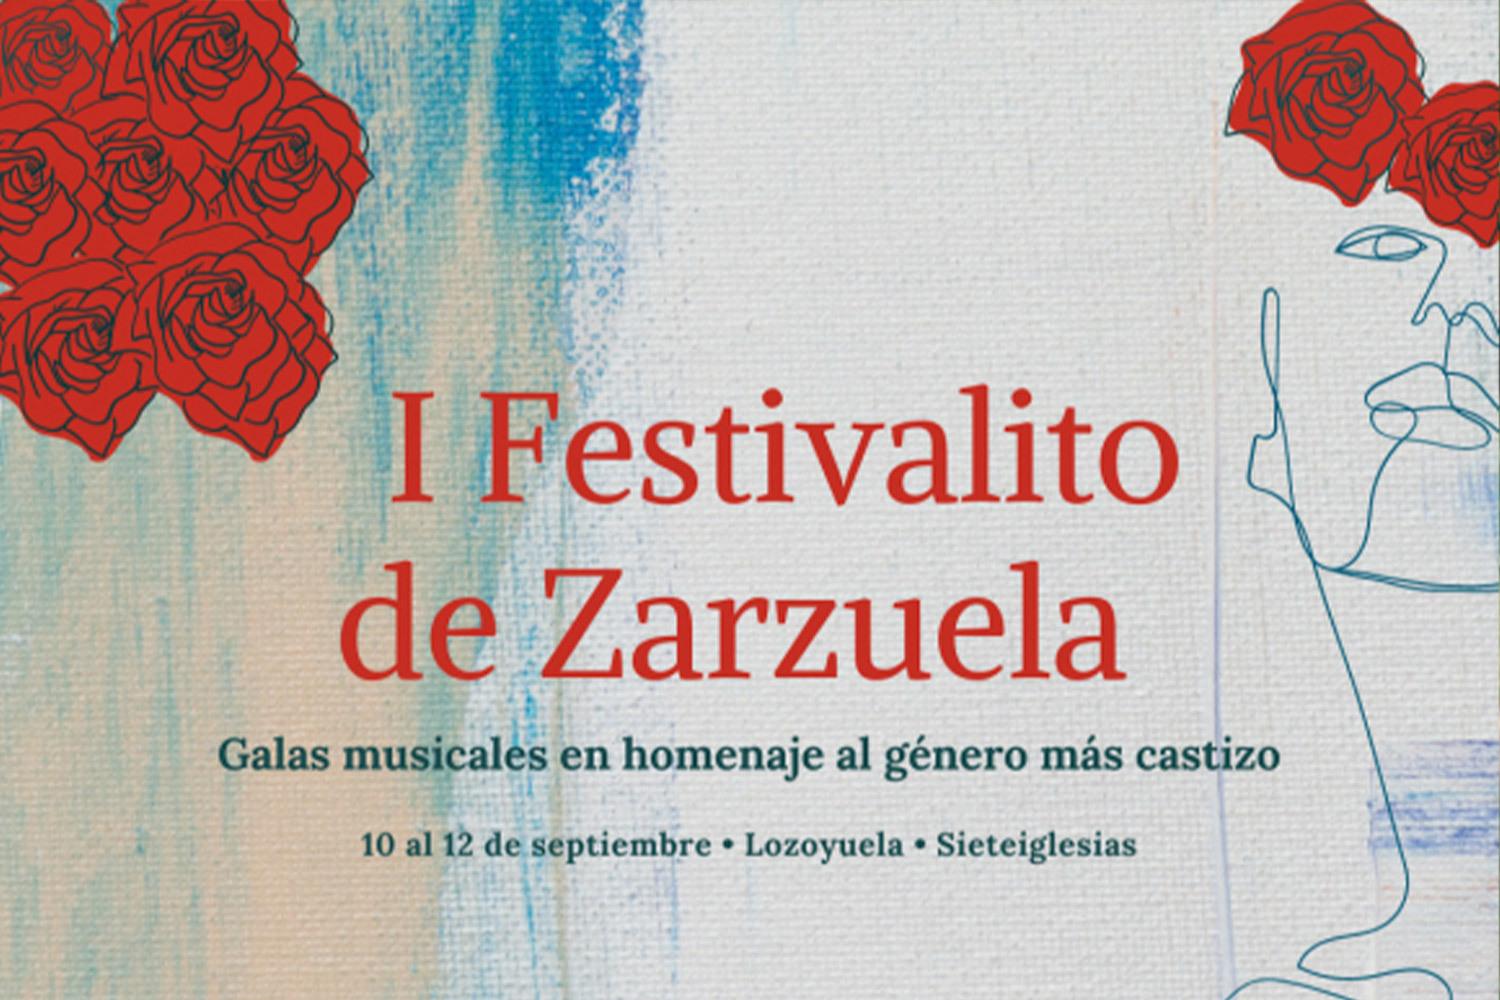 I Zarzuela Festival of Lozoyuela-Navas-Sieteiglesias